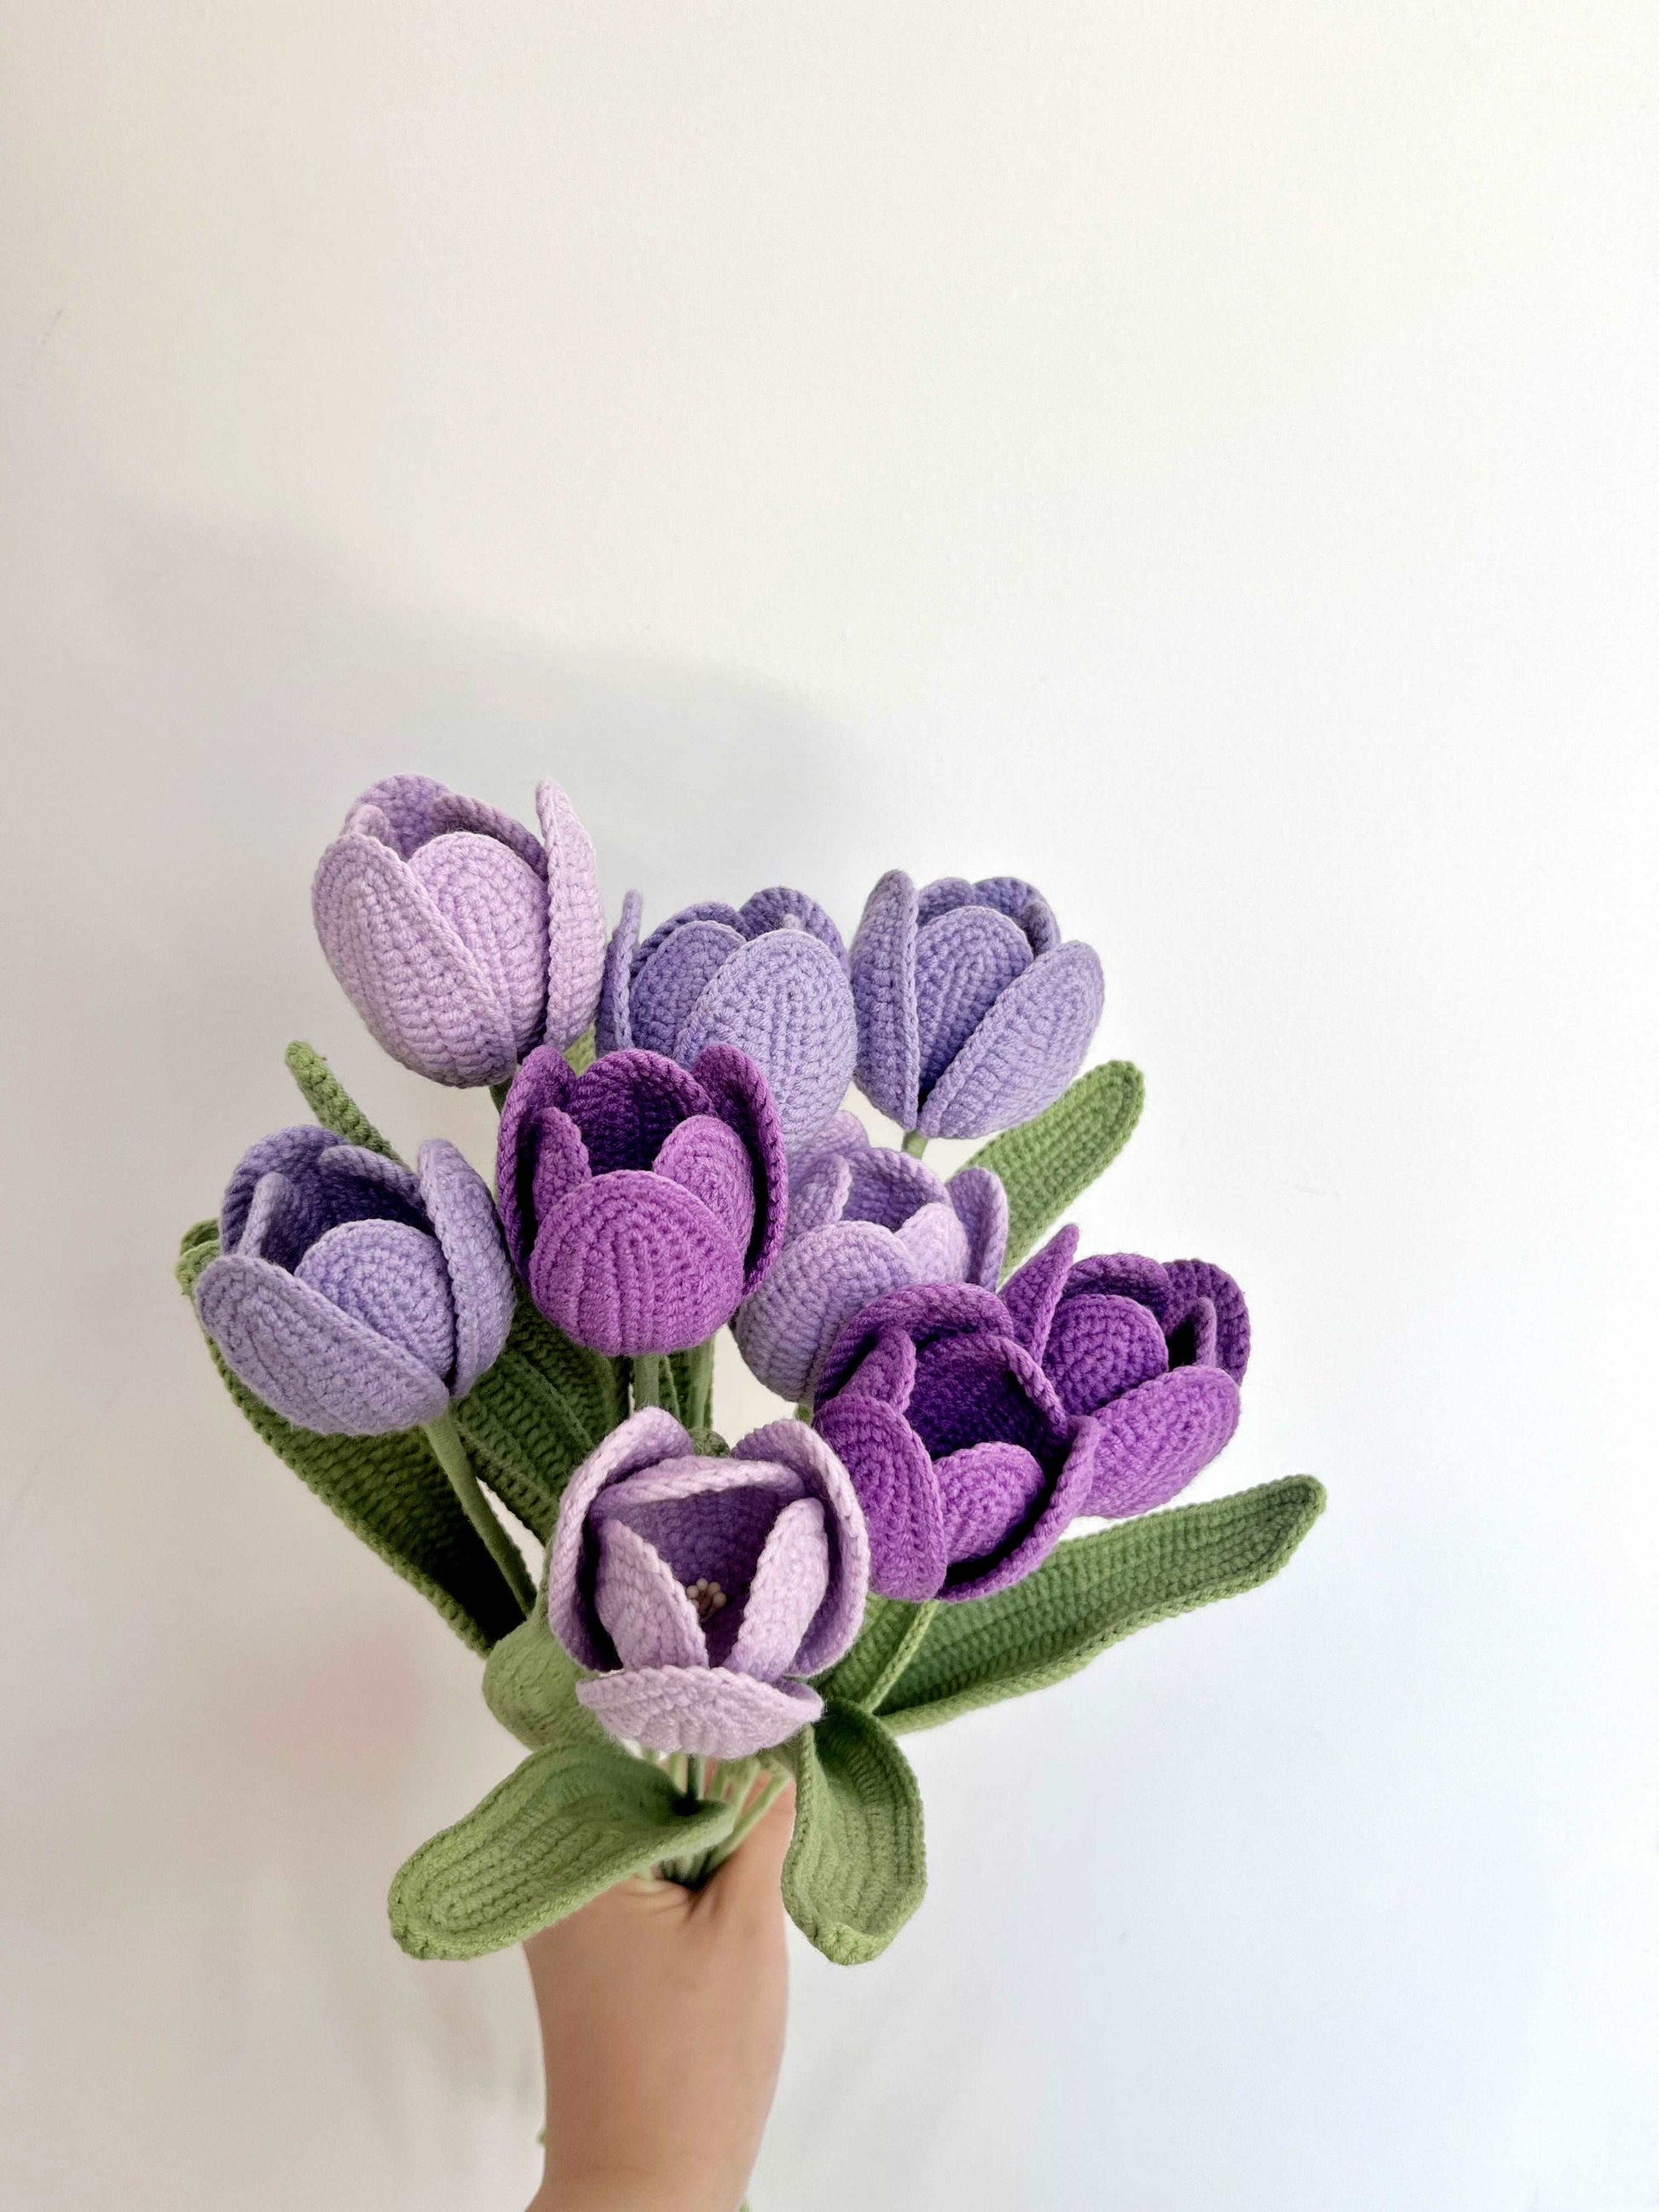 Artisanal Crochet Rose Bundle in Shades of Purple